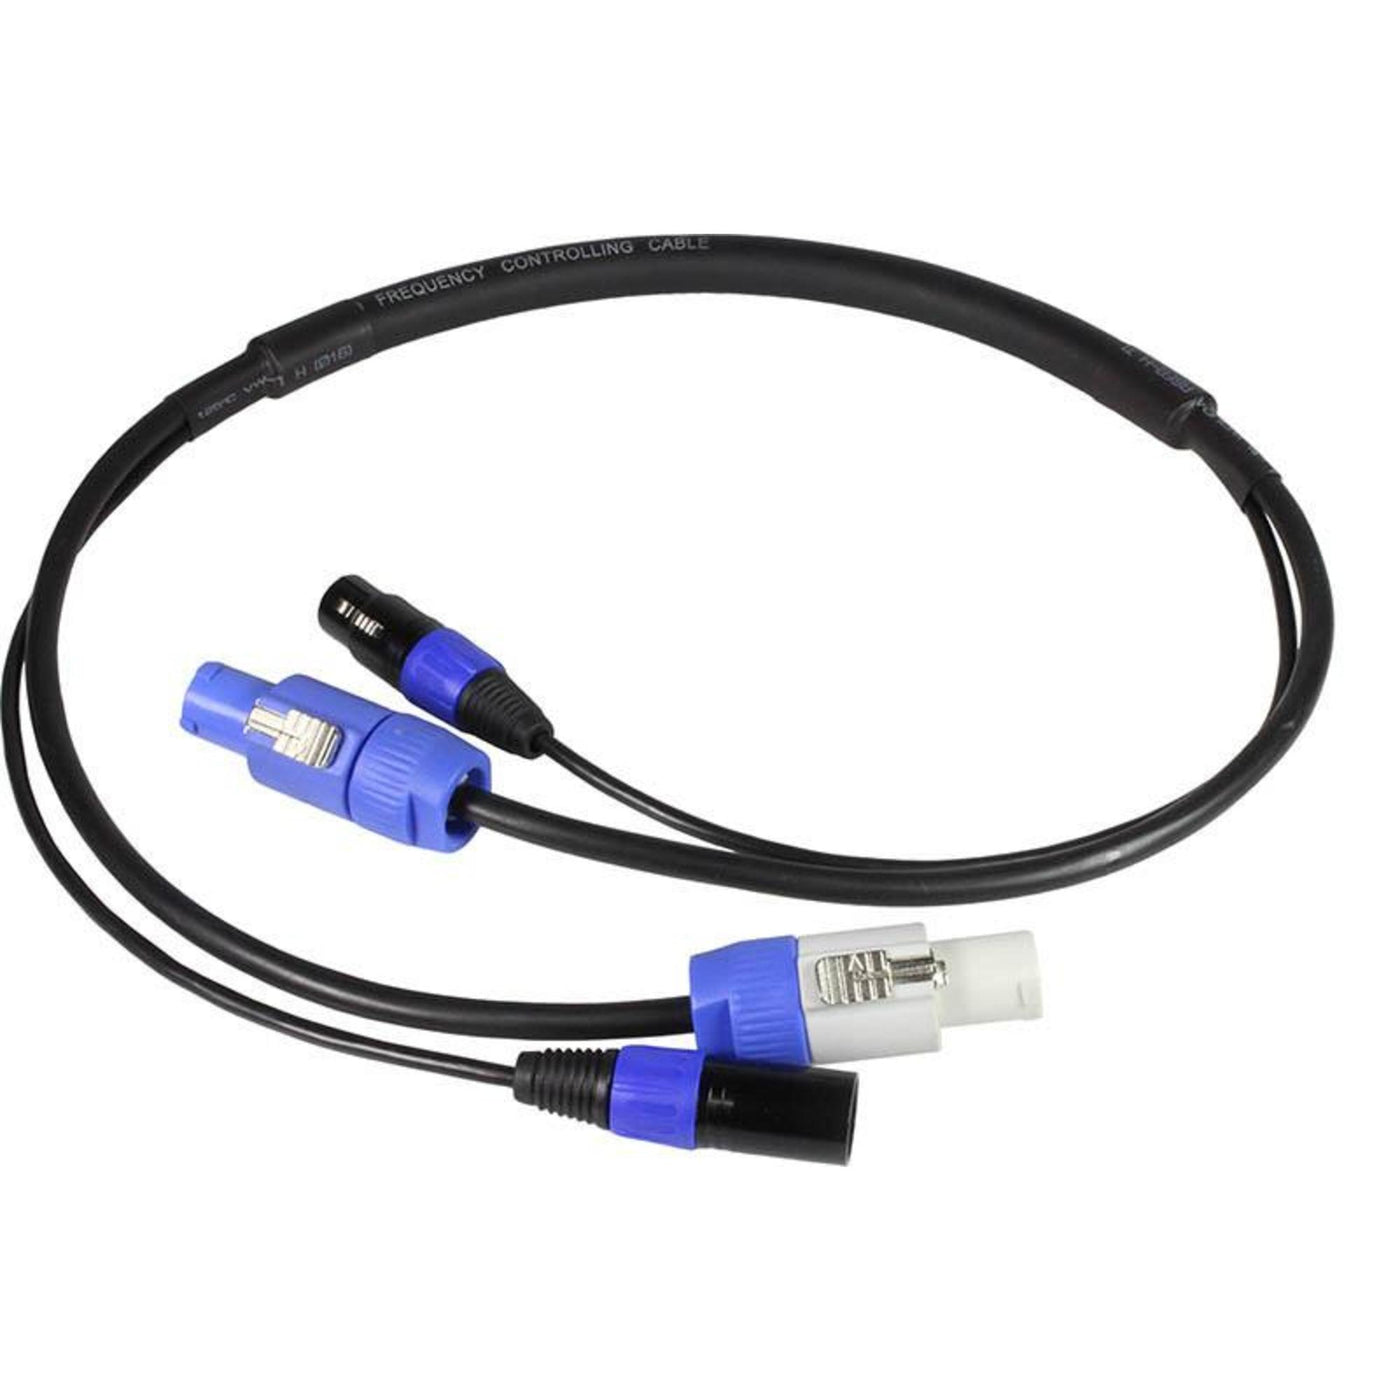 Blizzard Cool Cable 123876 DMXPC-6 DMX 3-pin PC Combo Cable